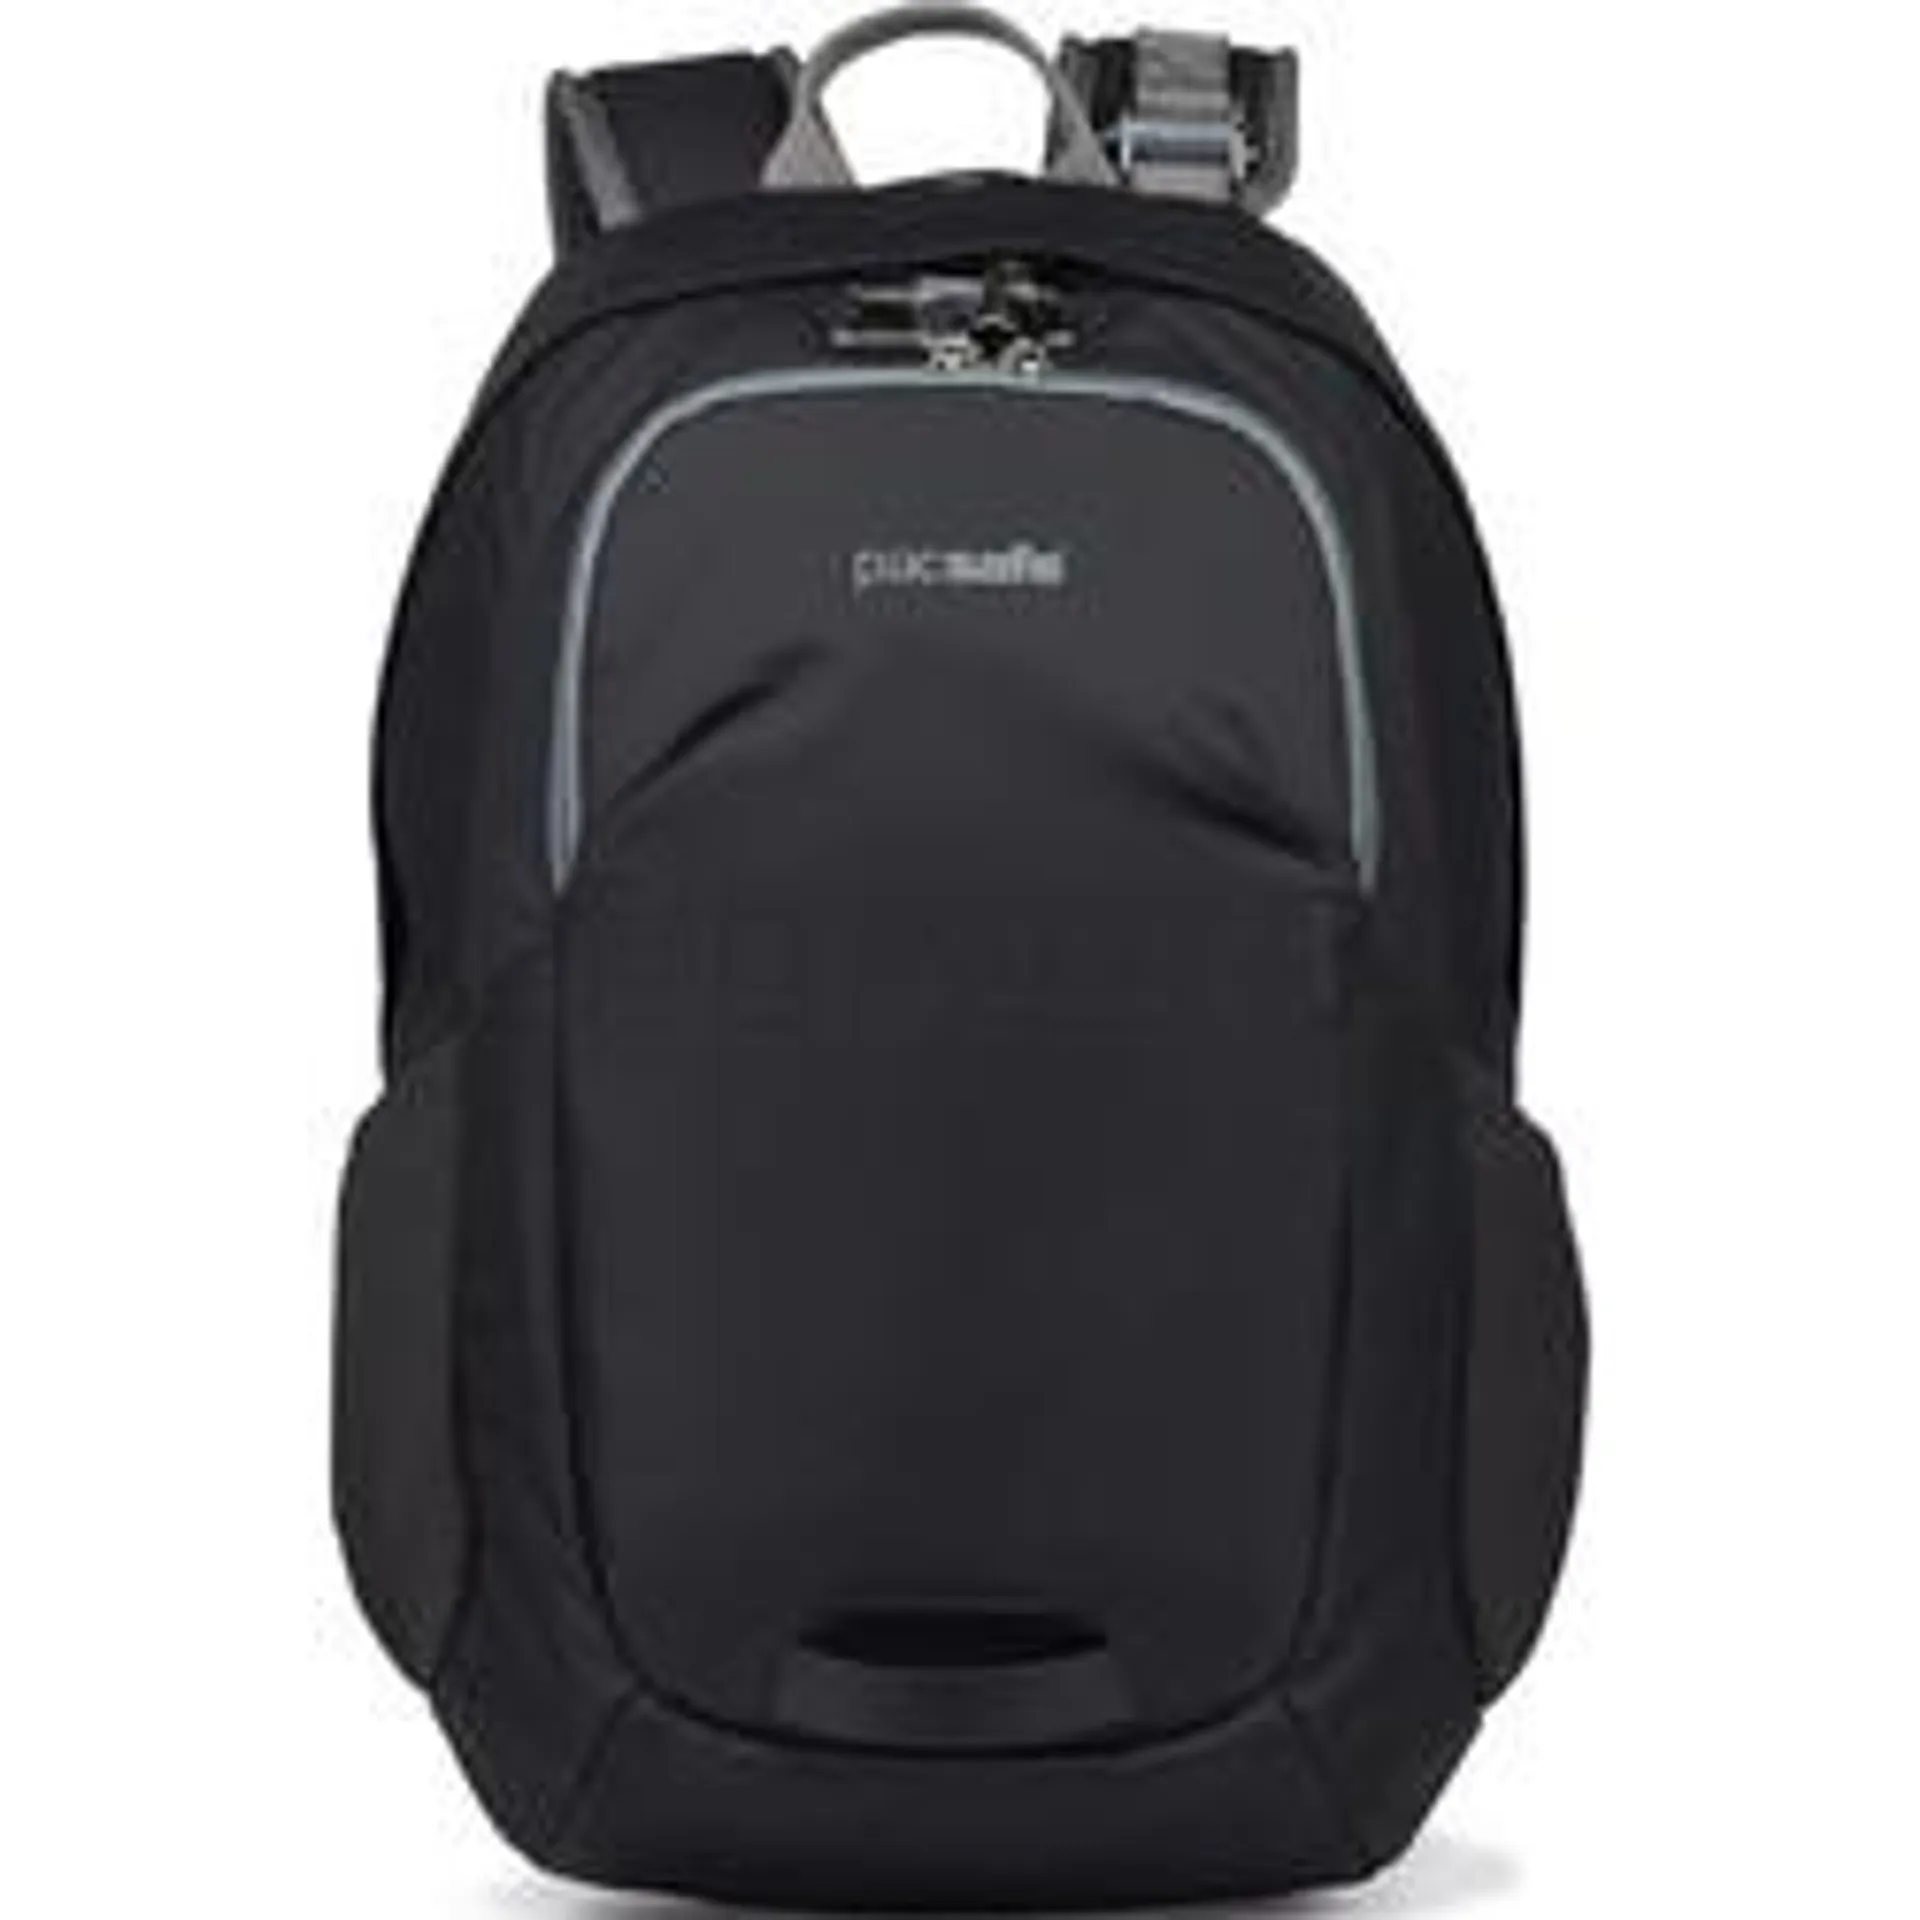 Pacsafe Venturesafe G3 15L Anti-Theft 13.3" Laptop Backpack Black 60540